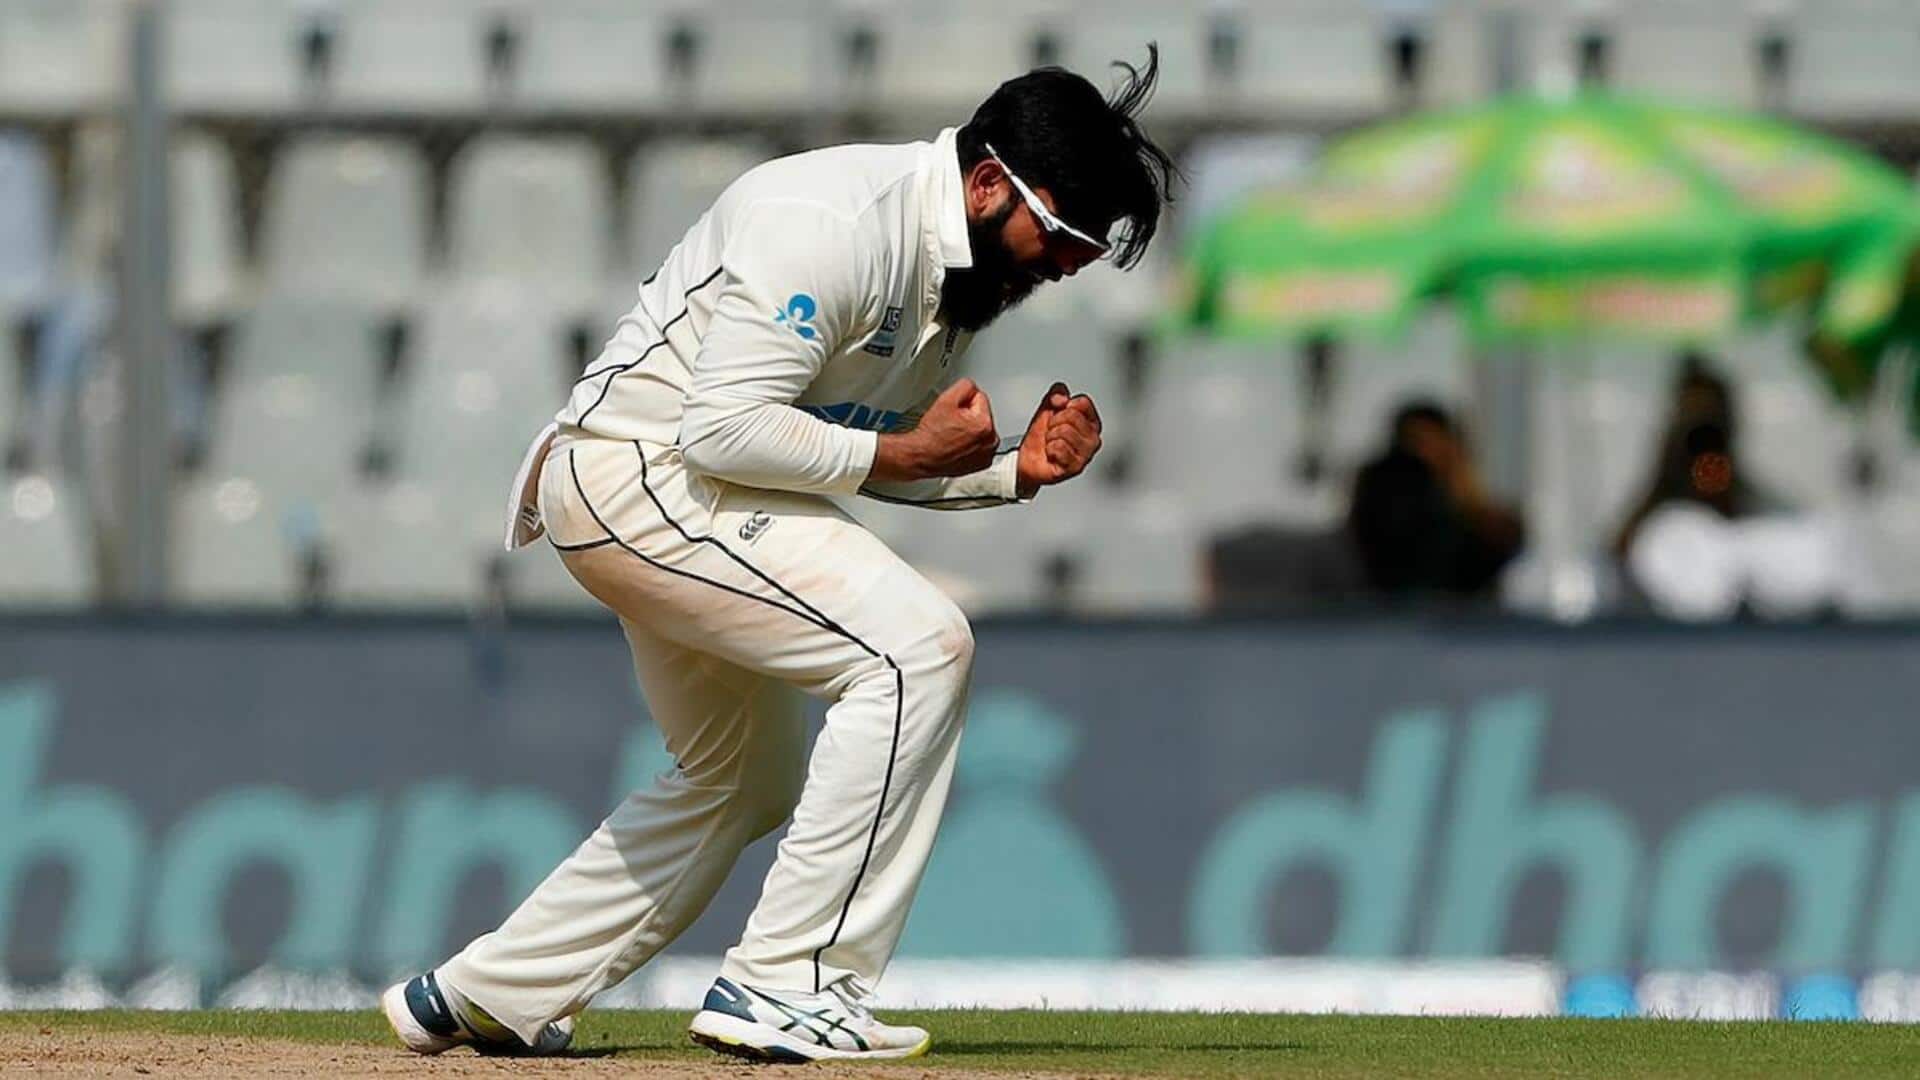 Ajaz Patel stars with sensational six-wicket haul against Bangladesh